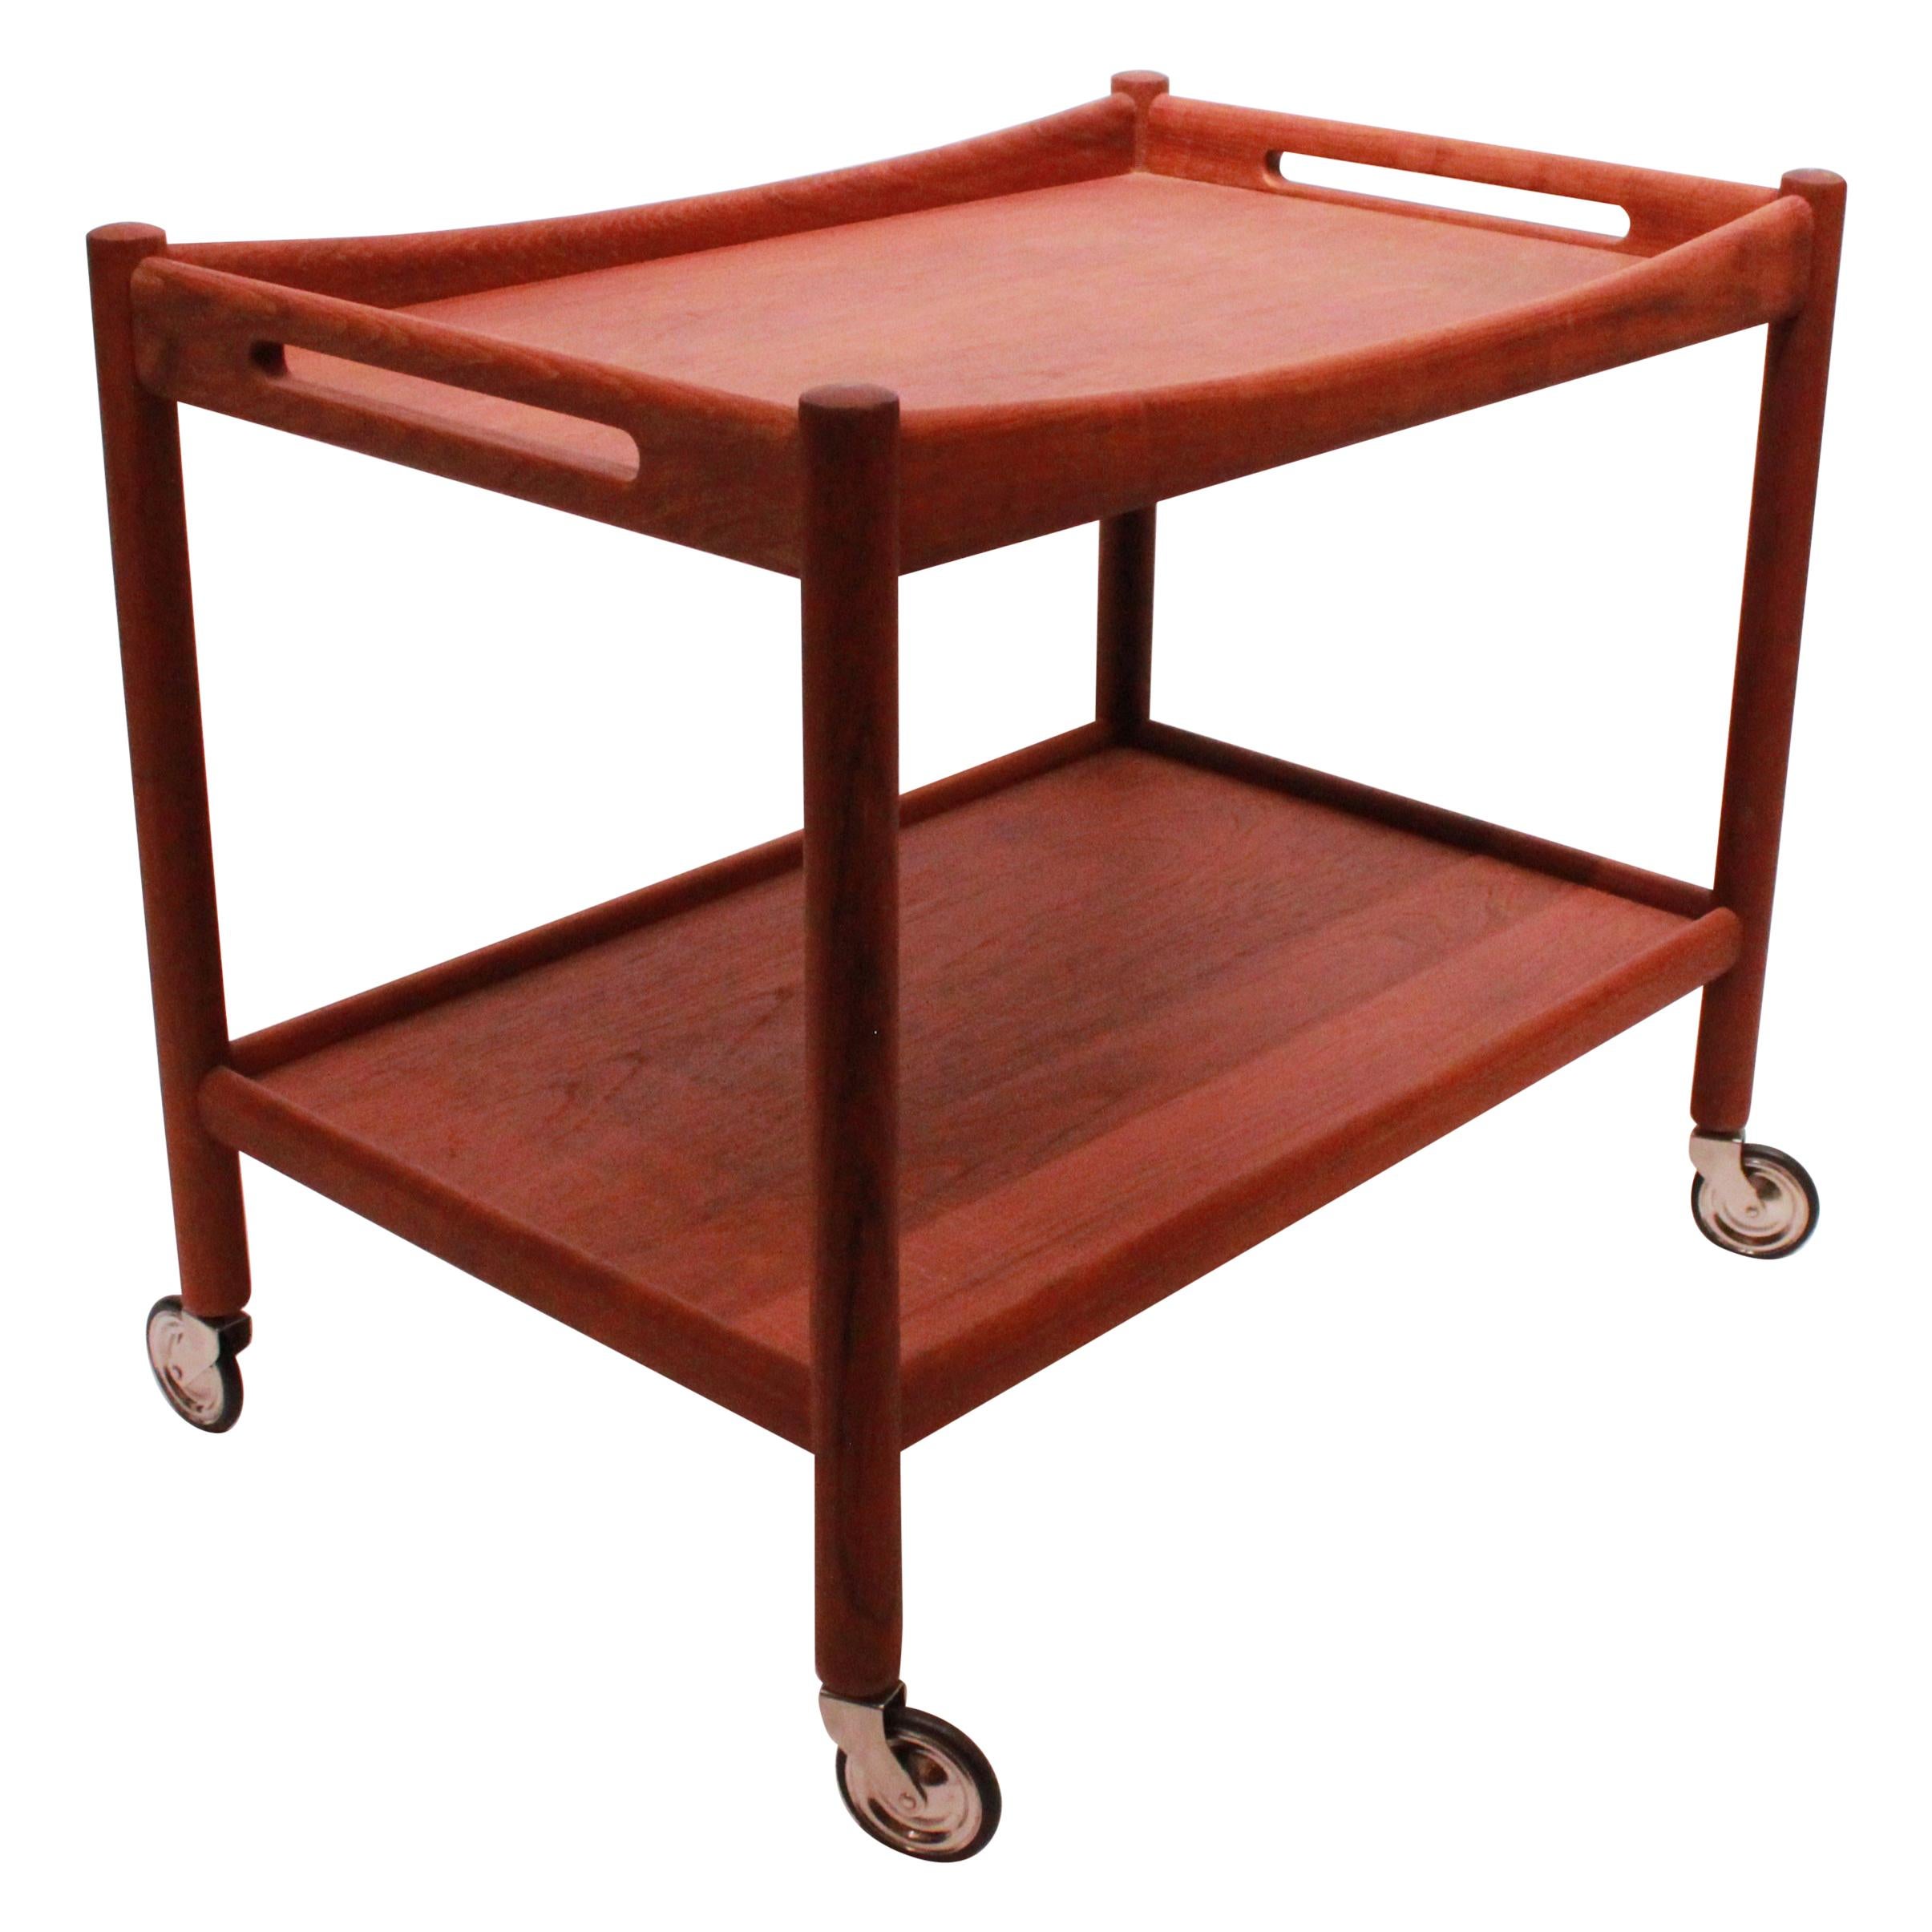 Tray Table in Teak Designed by Hans J. Wegner from the 1960s